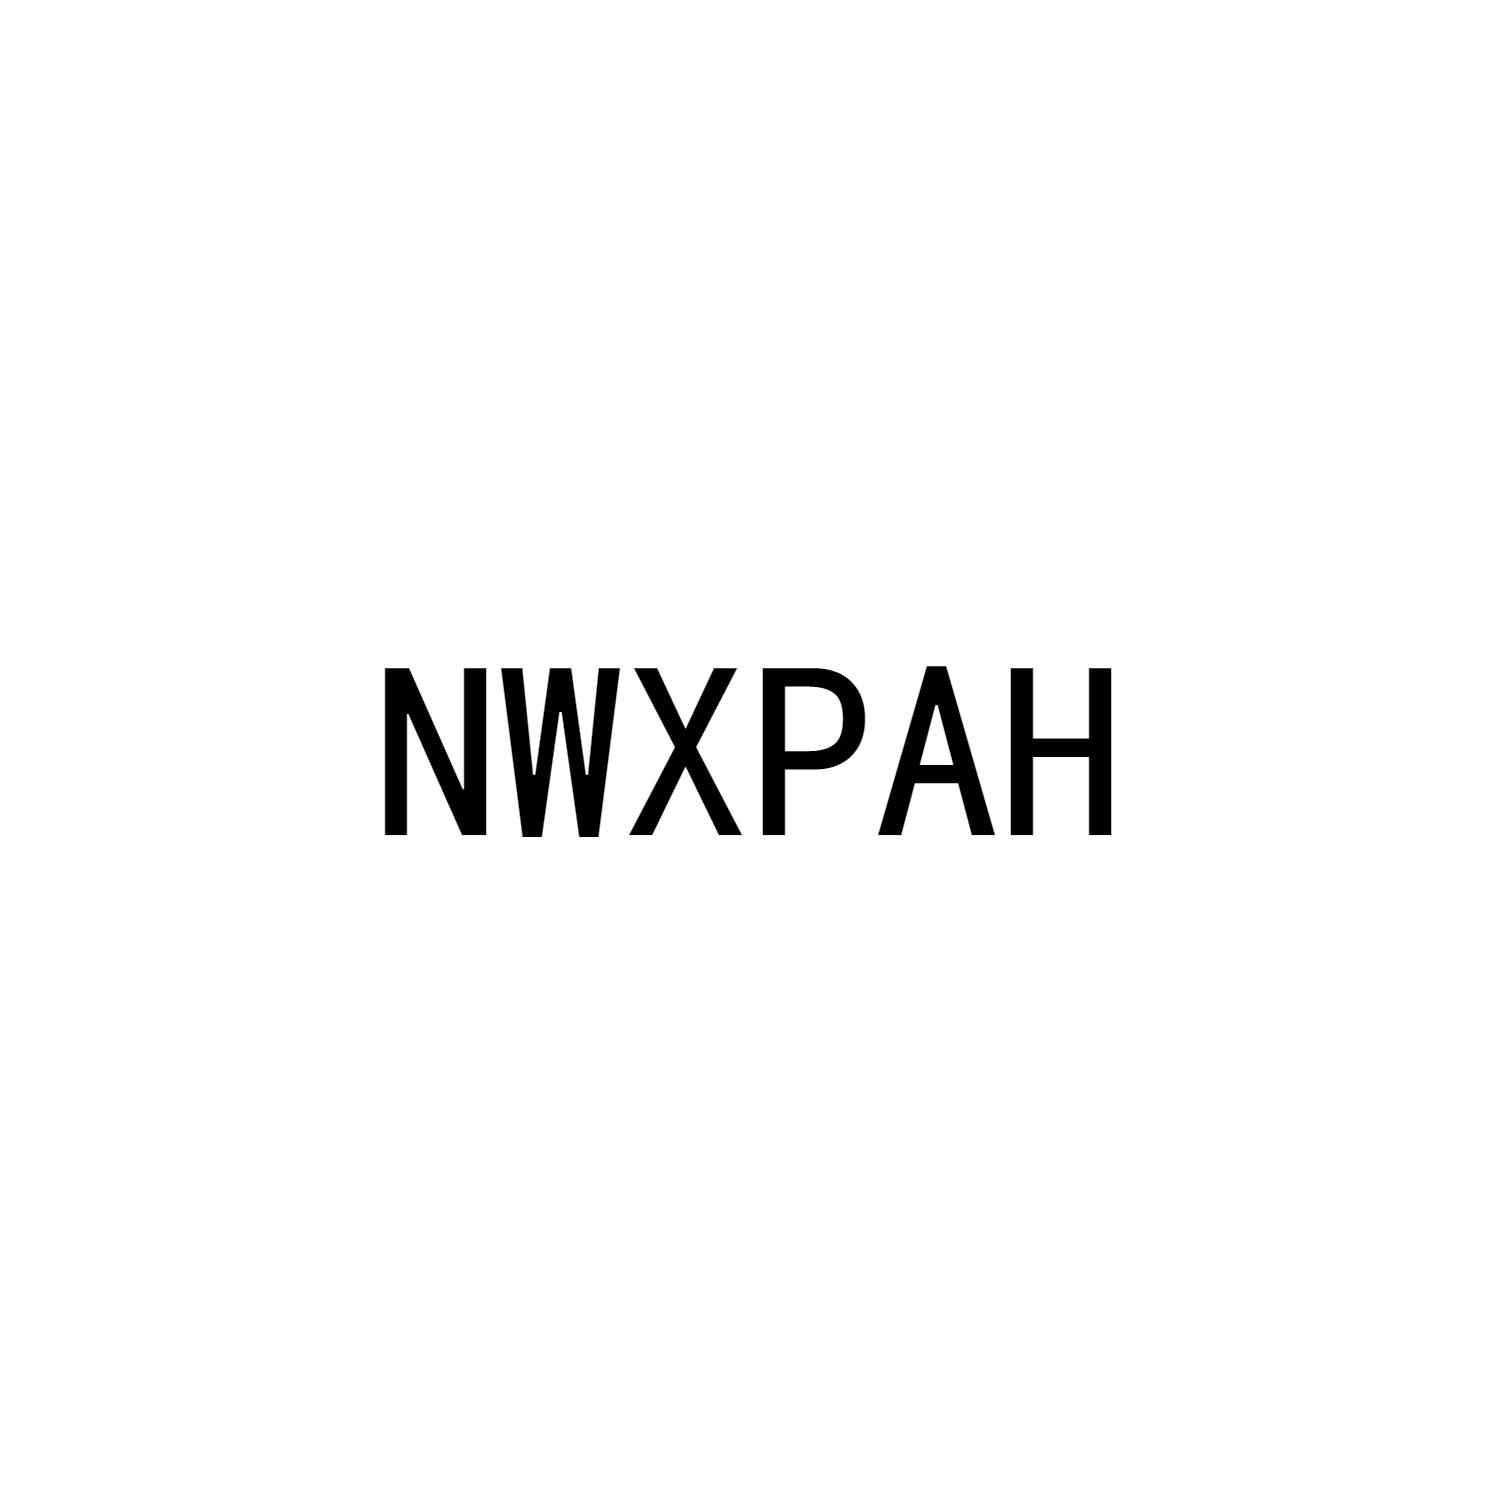 NWXPAH